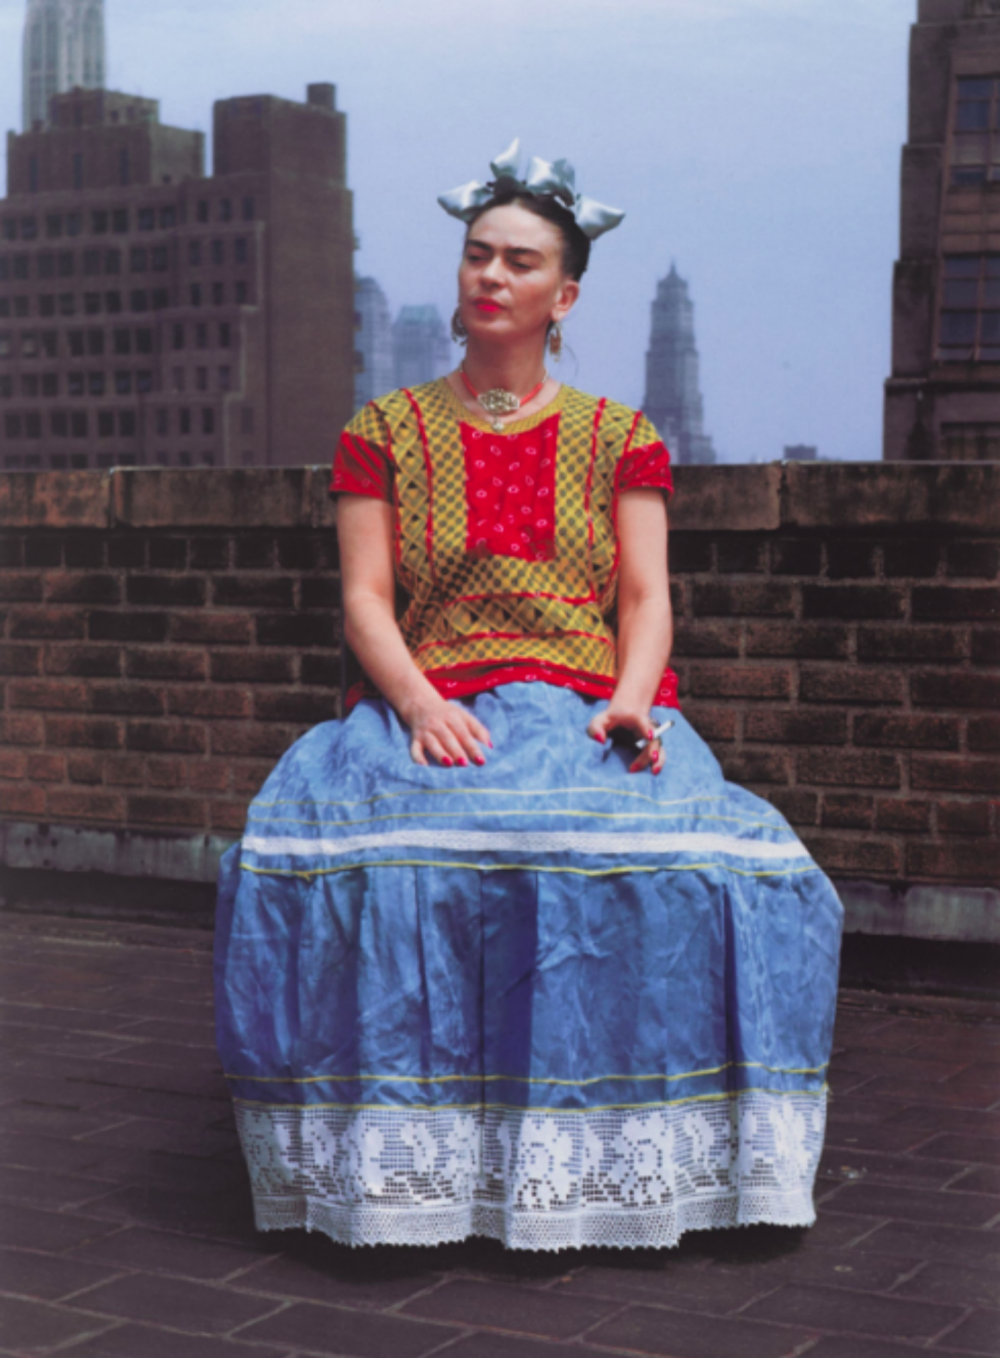 A photo of Frida Kahlo taken in New York